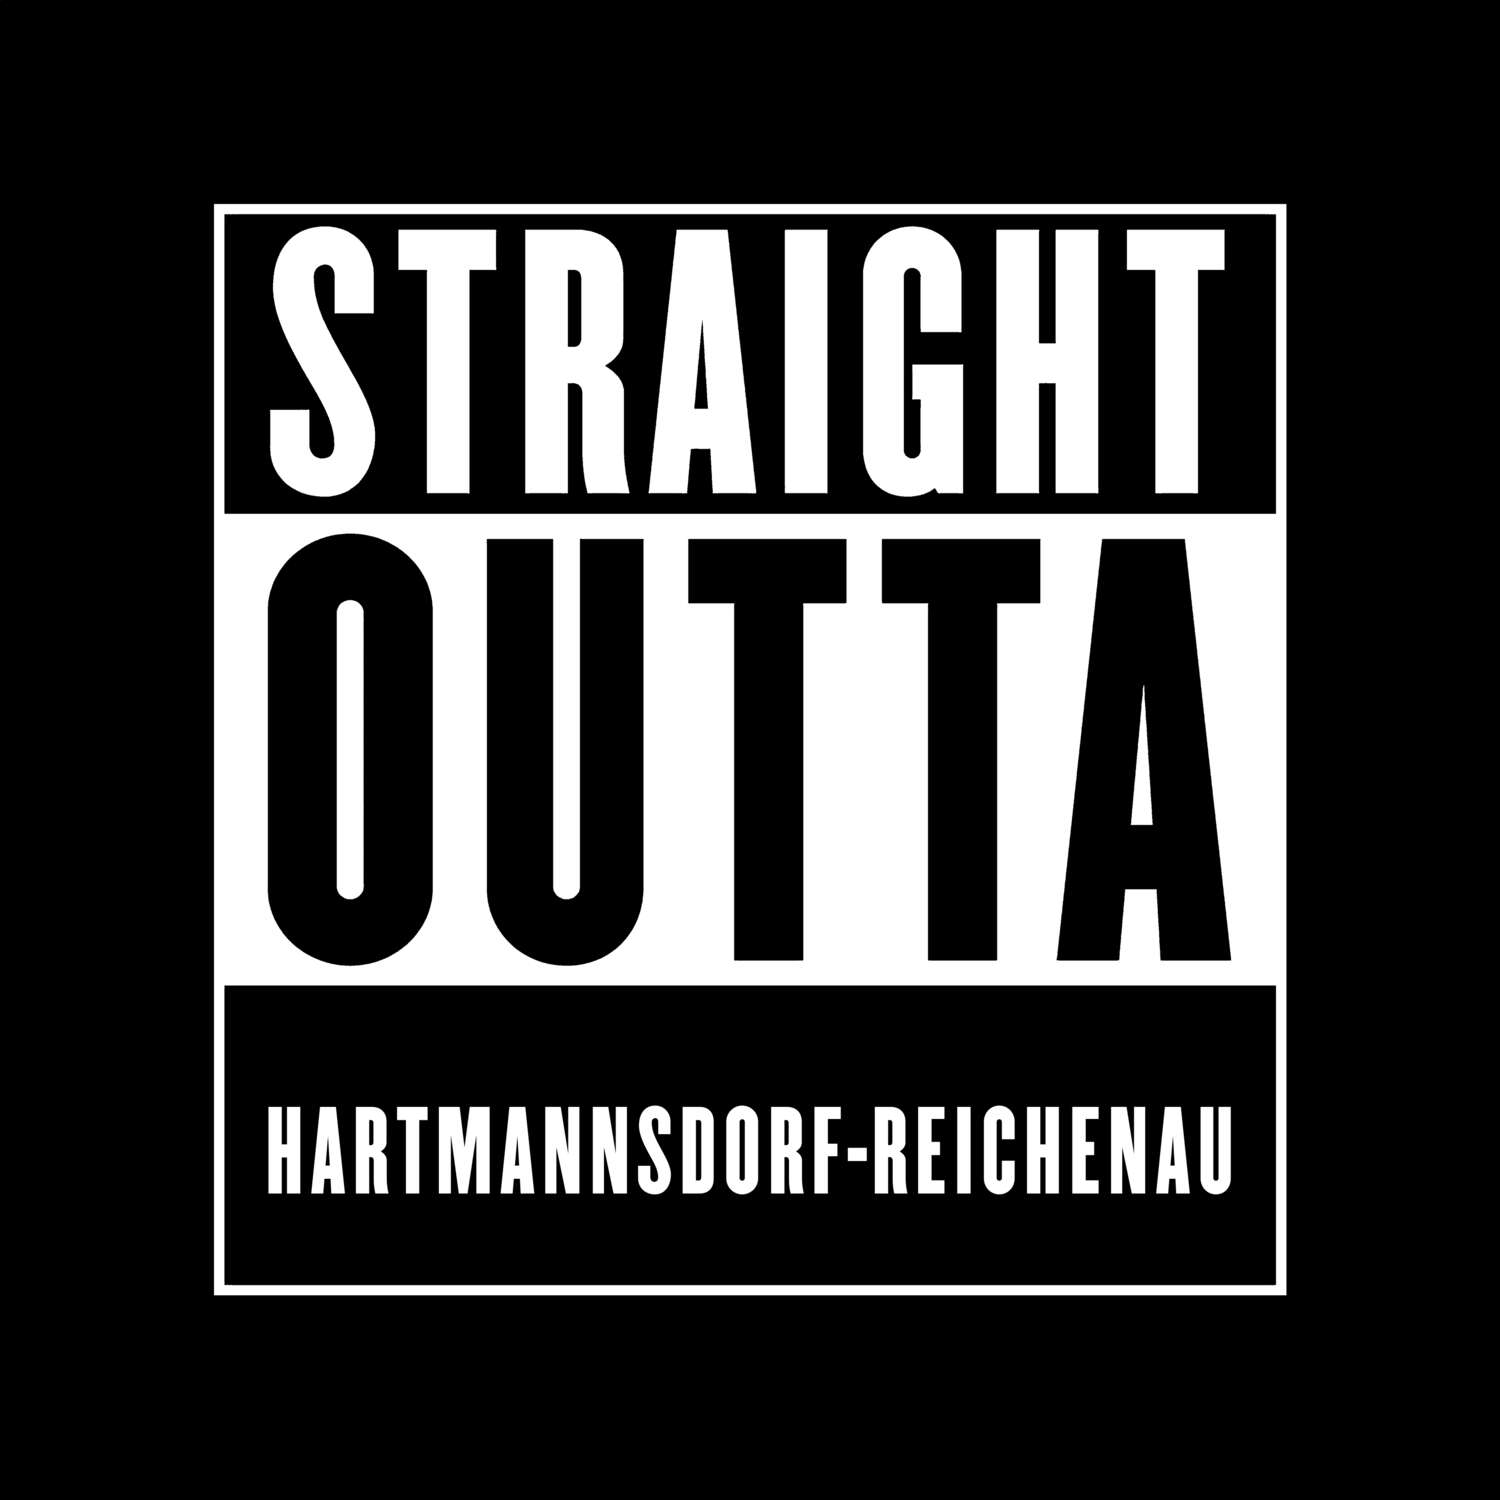 Hartmannsdorf-Reichenau T-Shirt »Straight Outta«